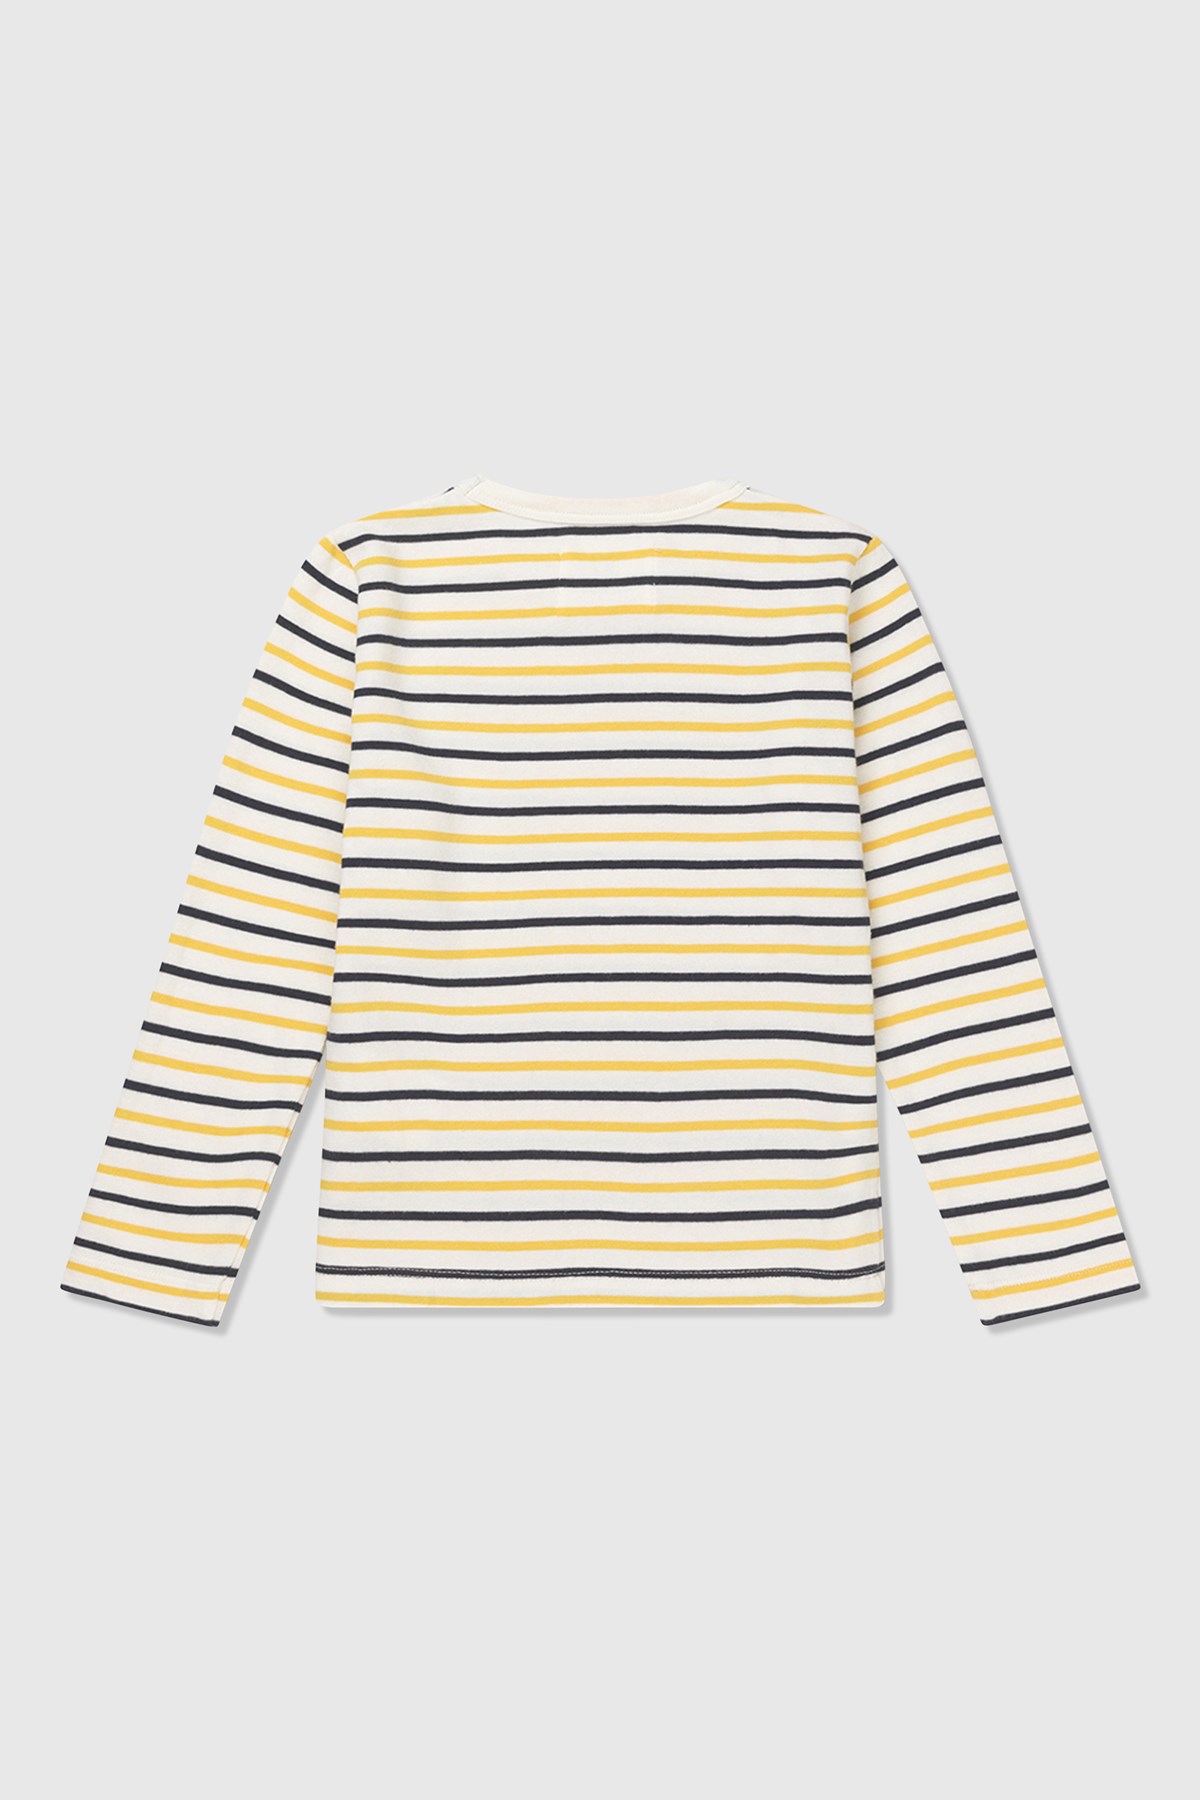 Double A T-shirt LS Off-white/yellow Wood Wood stripes kids by Kim stripe